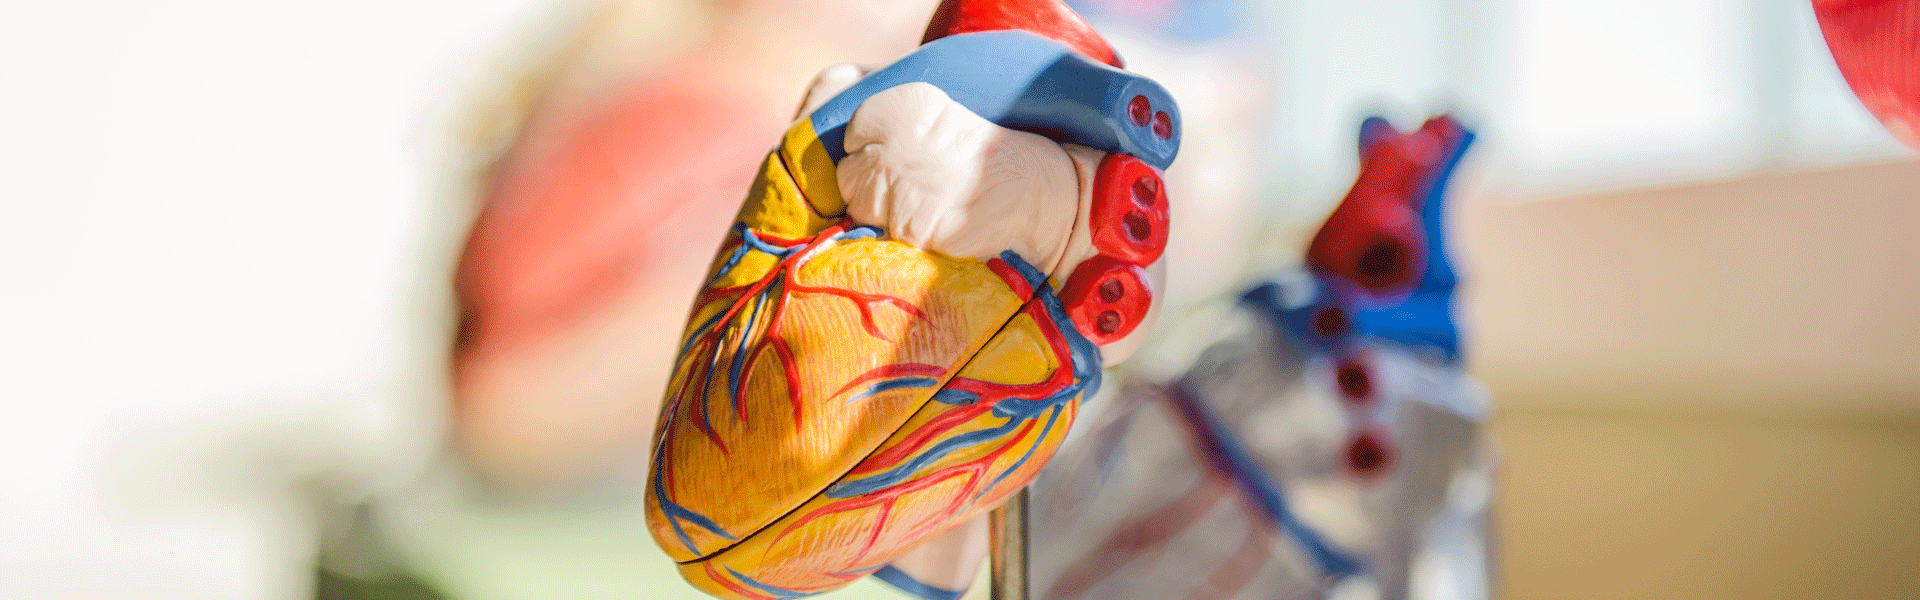 Anatomical model of a human heart